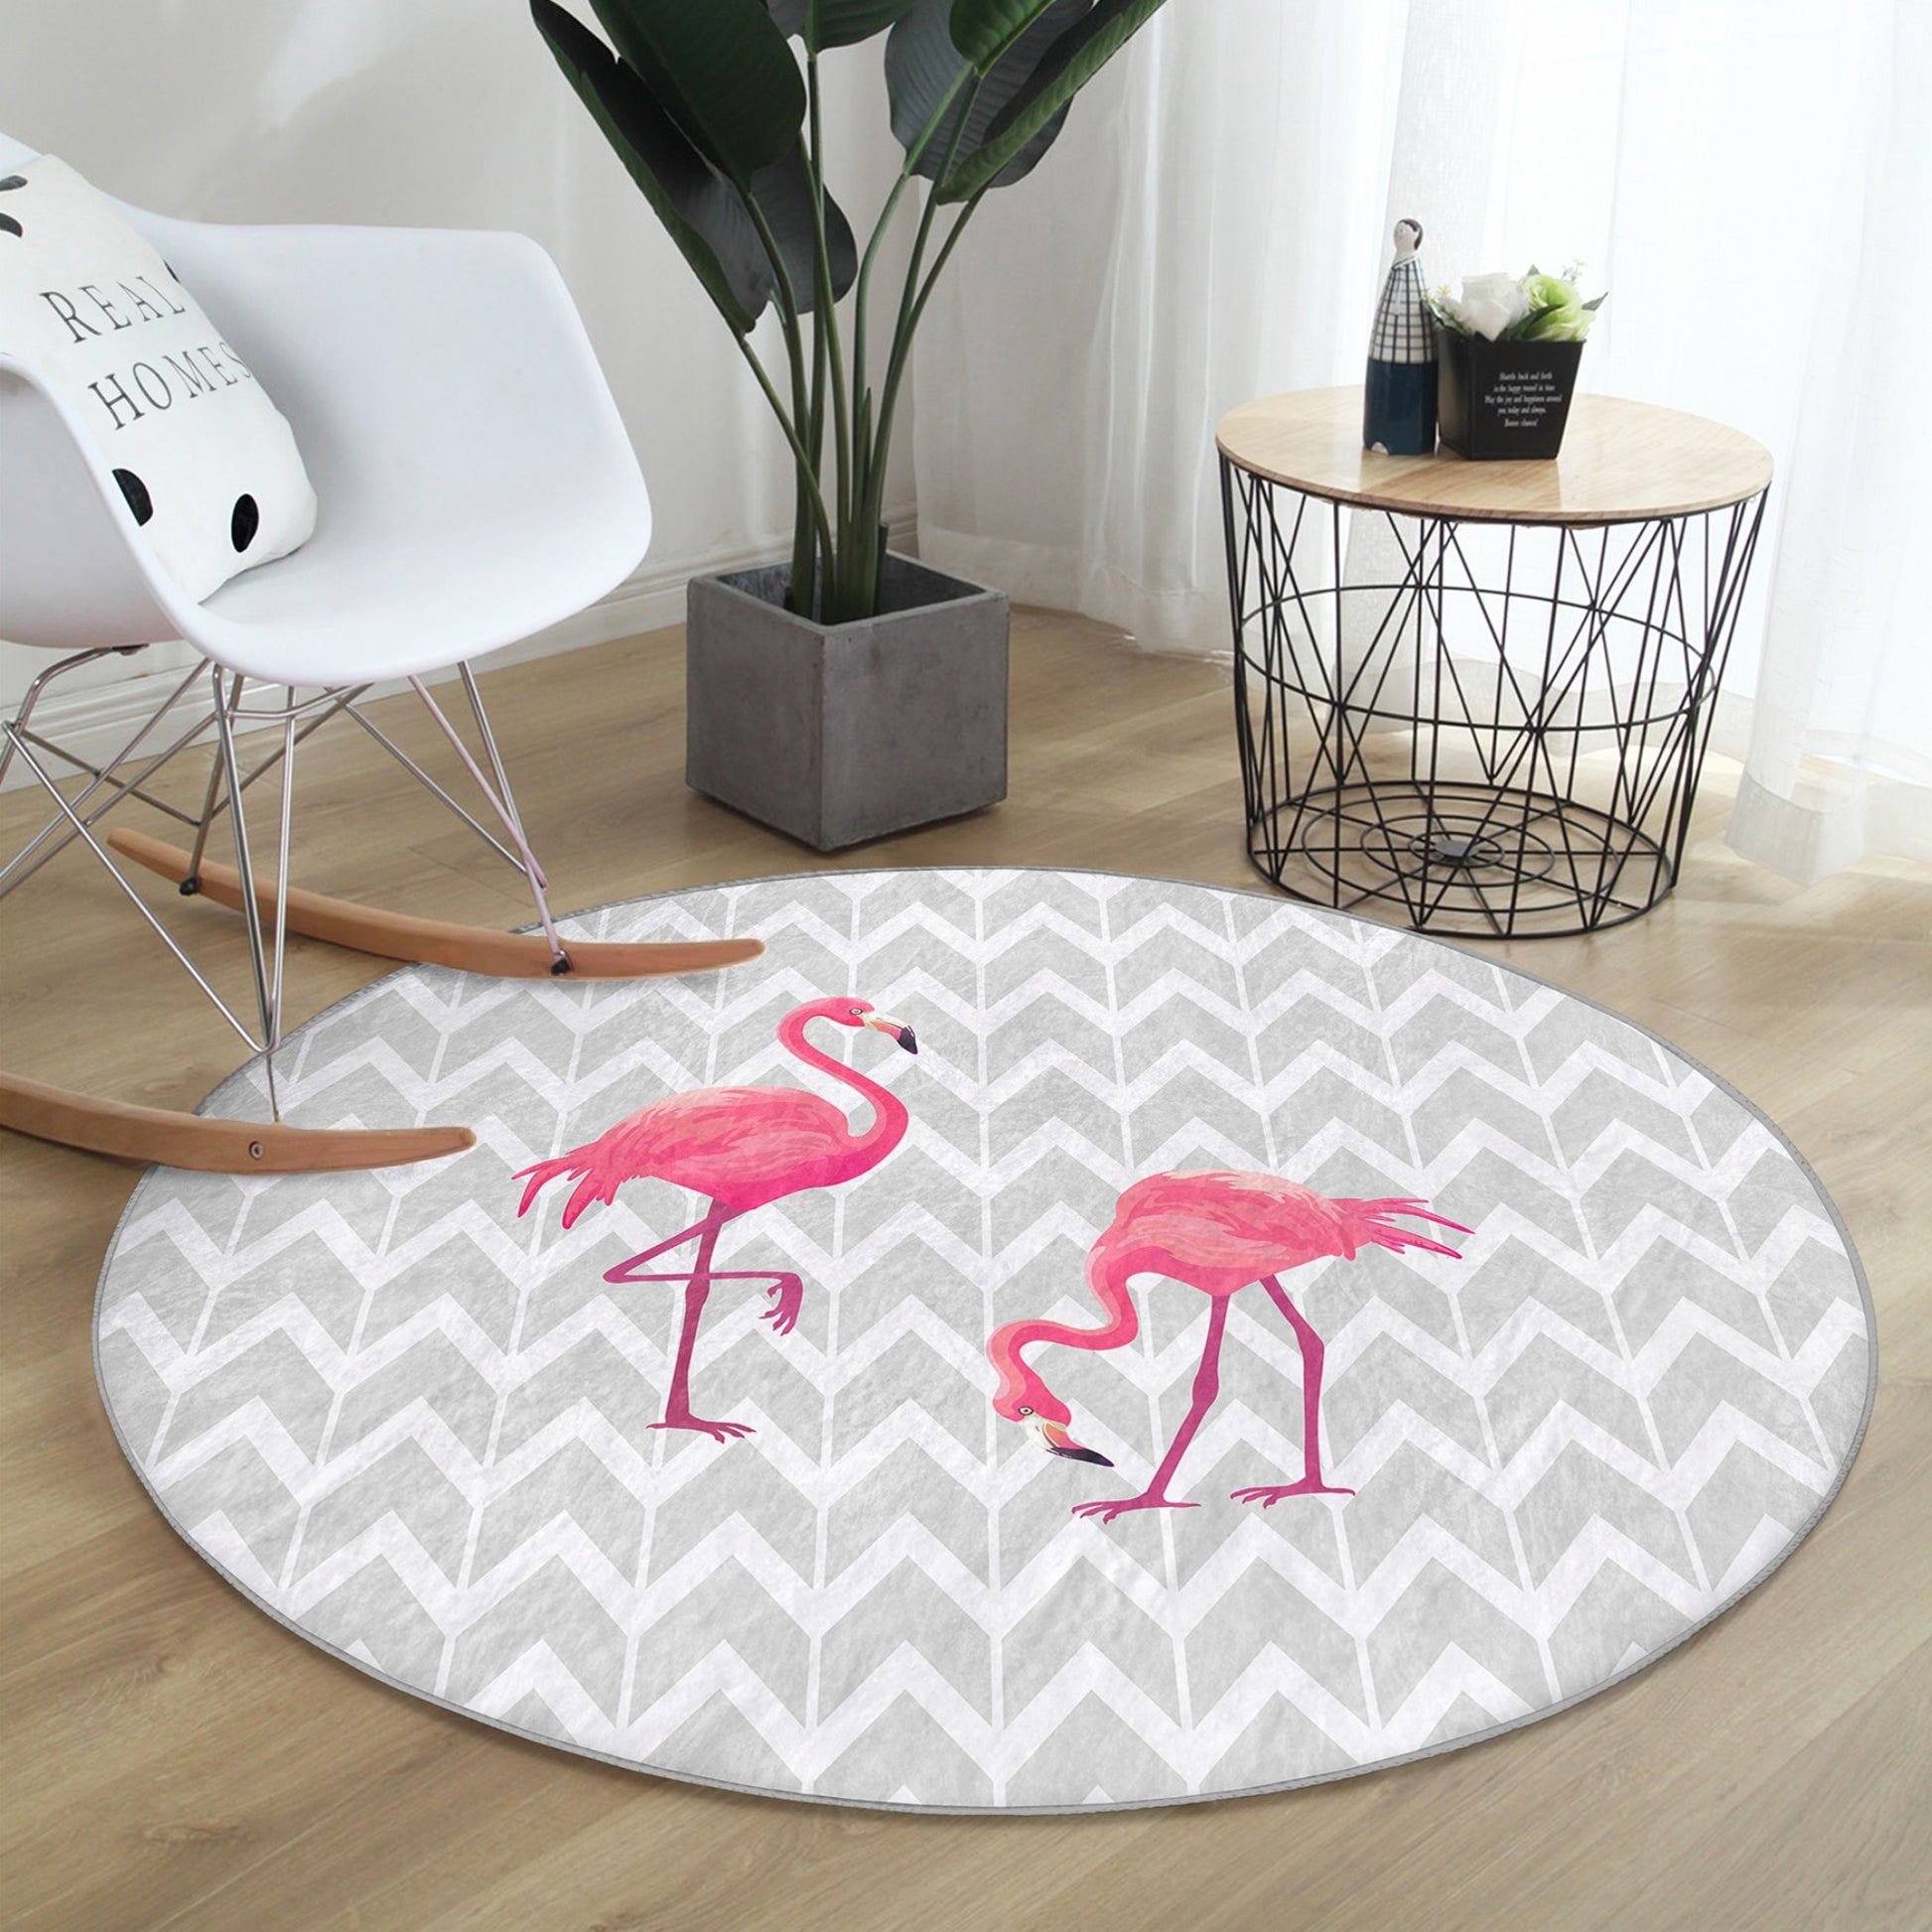 Washable Rug with Flamingo Pattern - Easy Maintenance